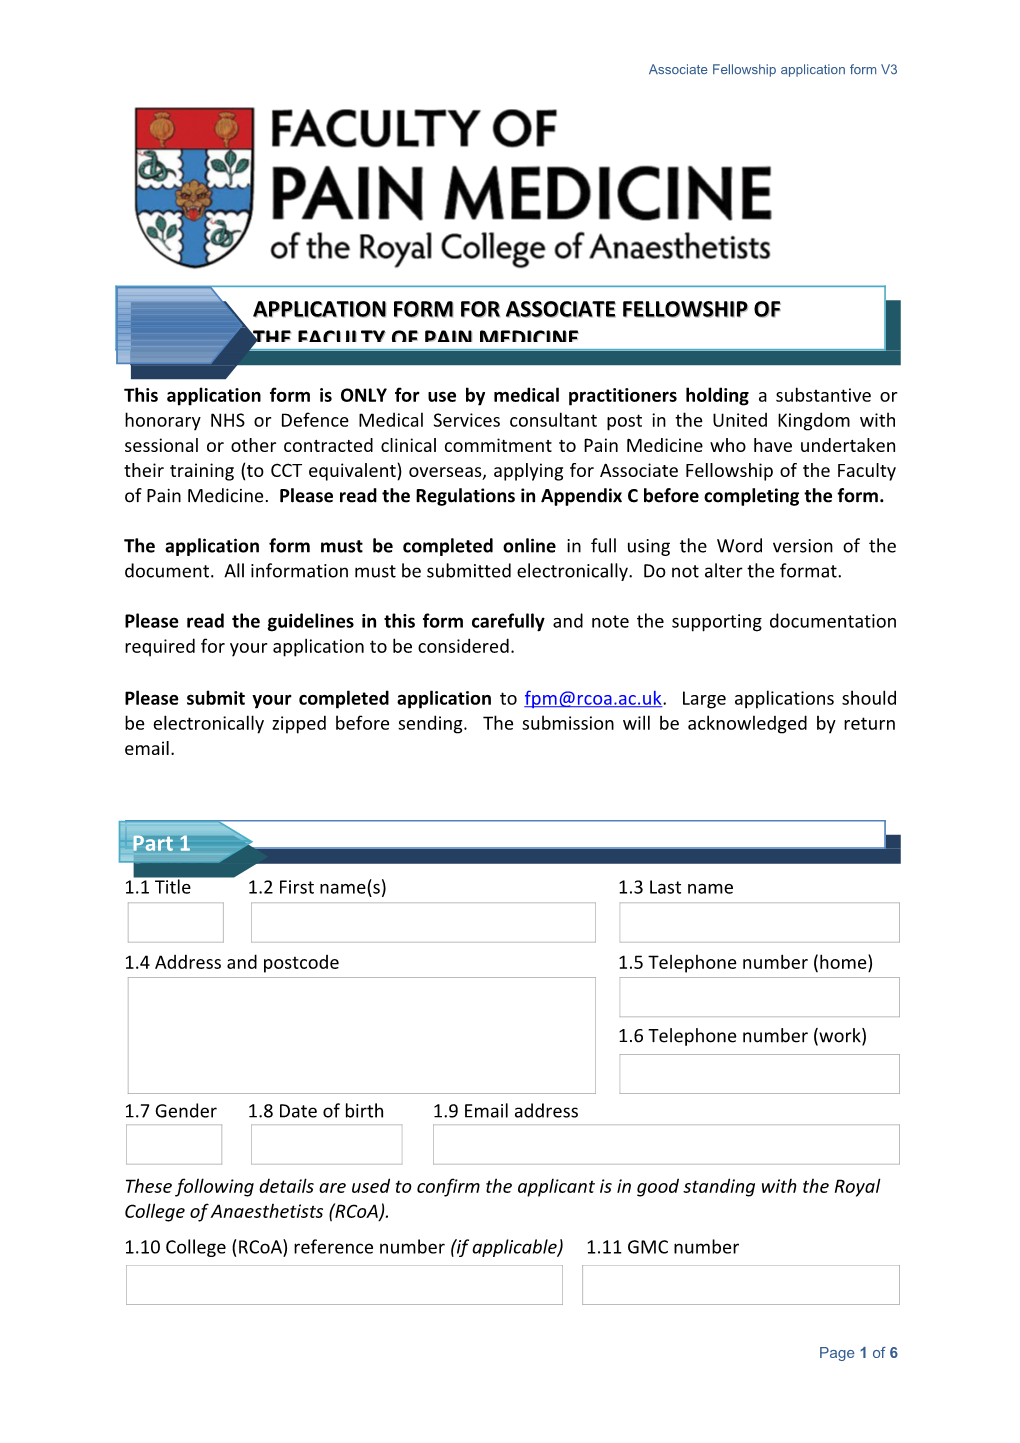 Associate Fellowship Application Form V3